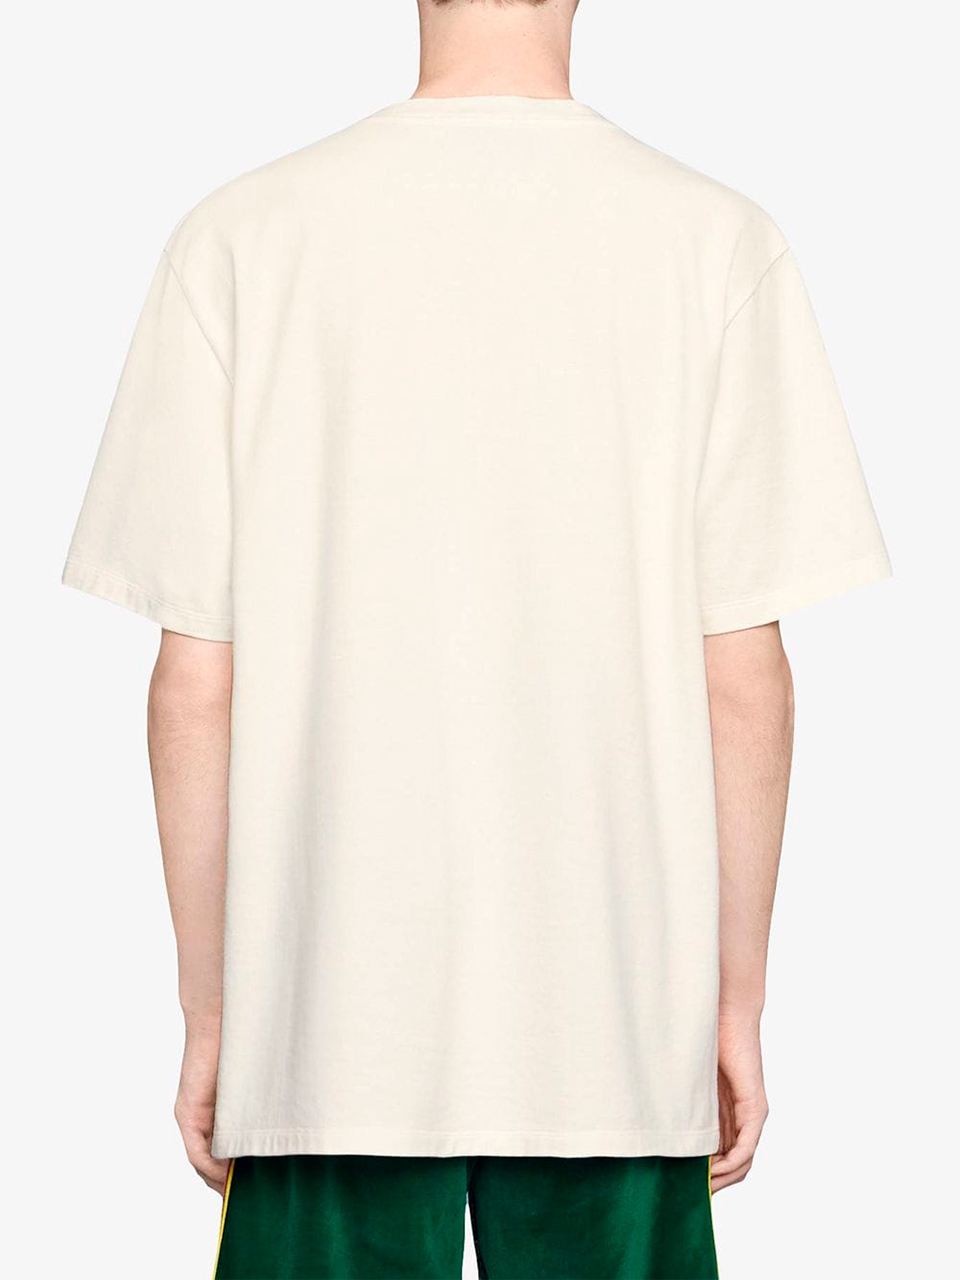 Imagem de: Camiseta Gucci Branca com Estampa Gucci Blade